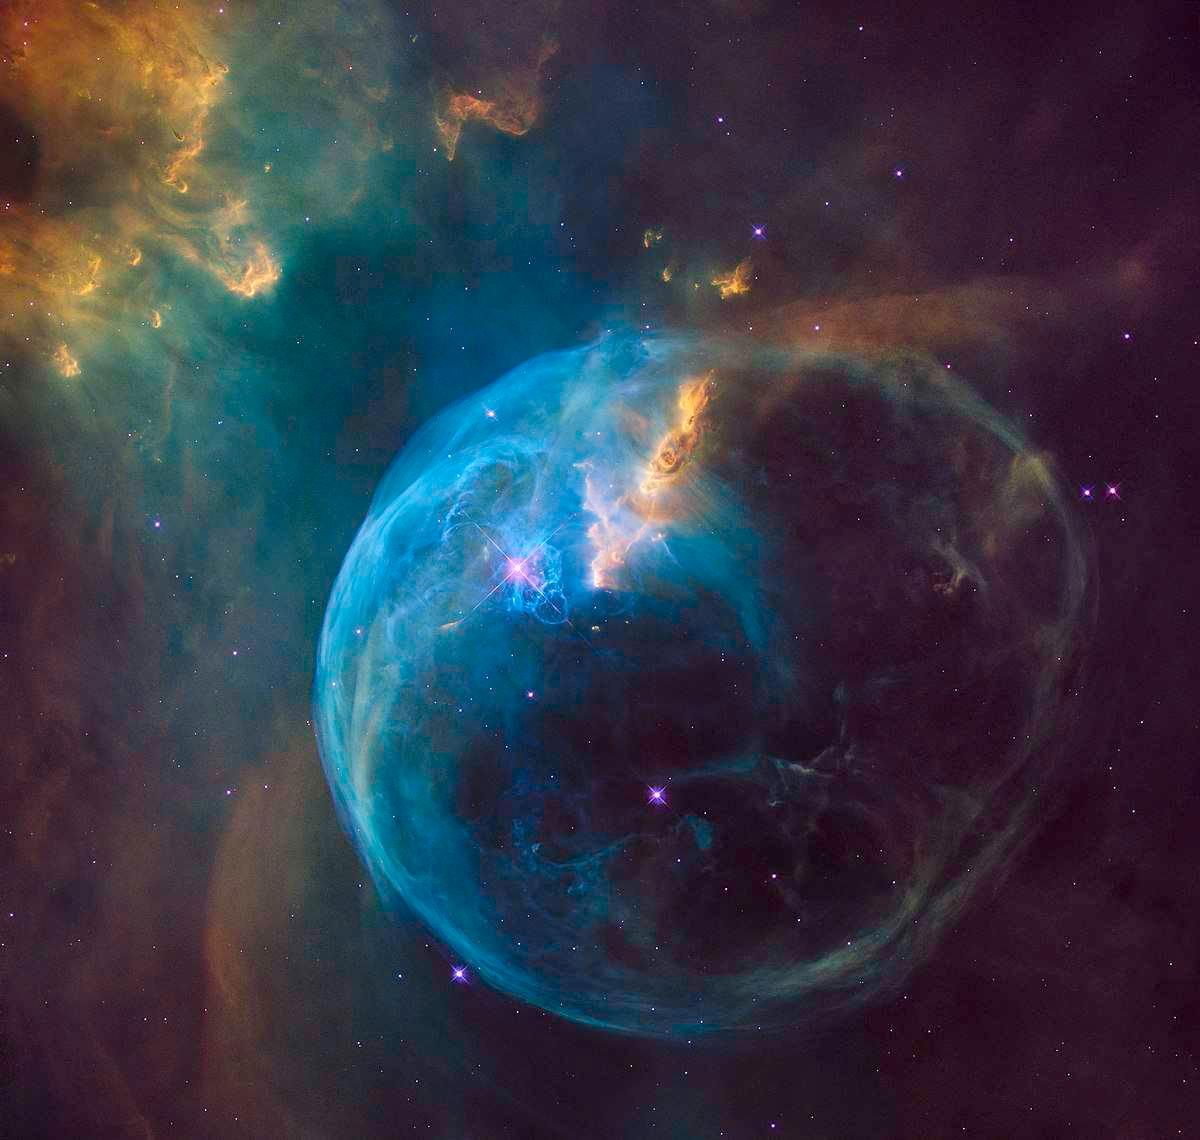 Nasa bubble nebula image sonification